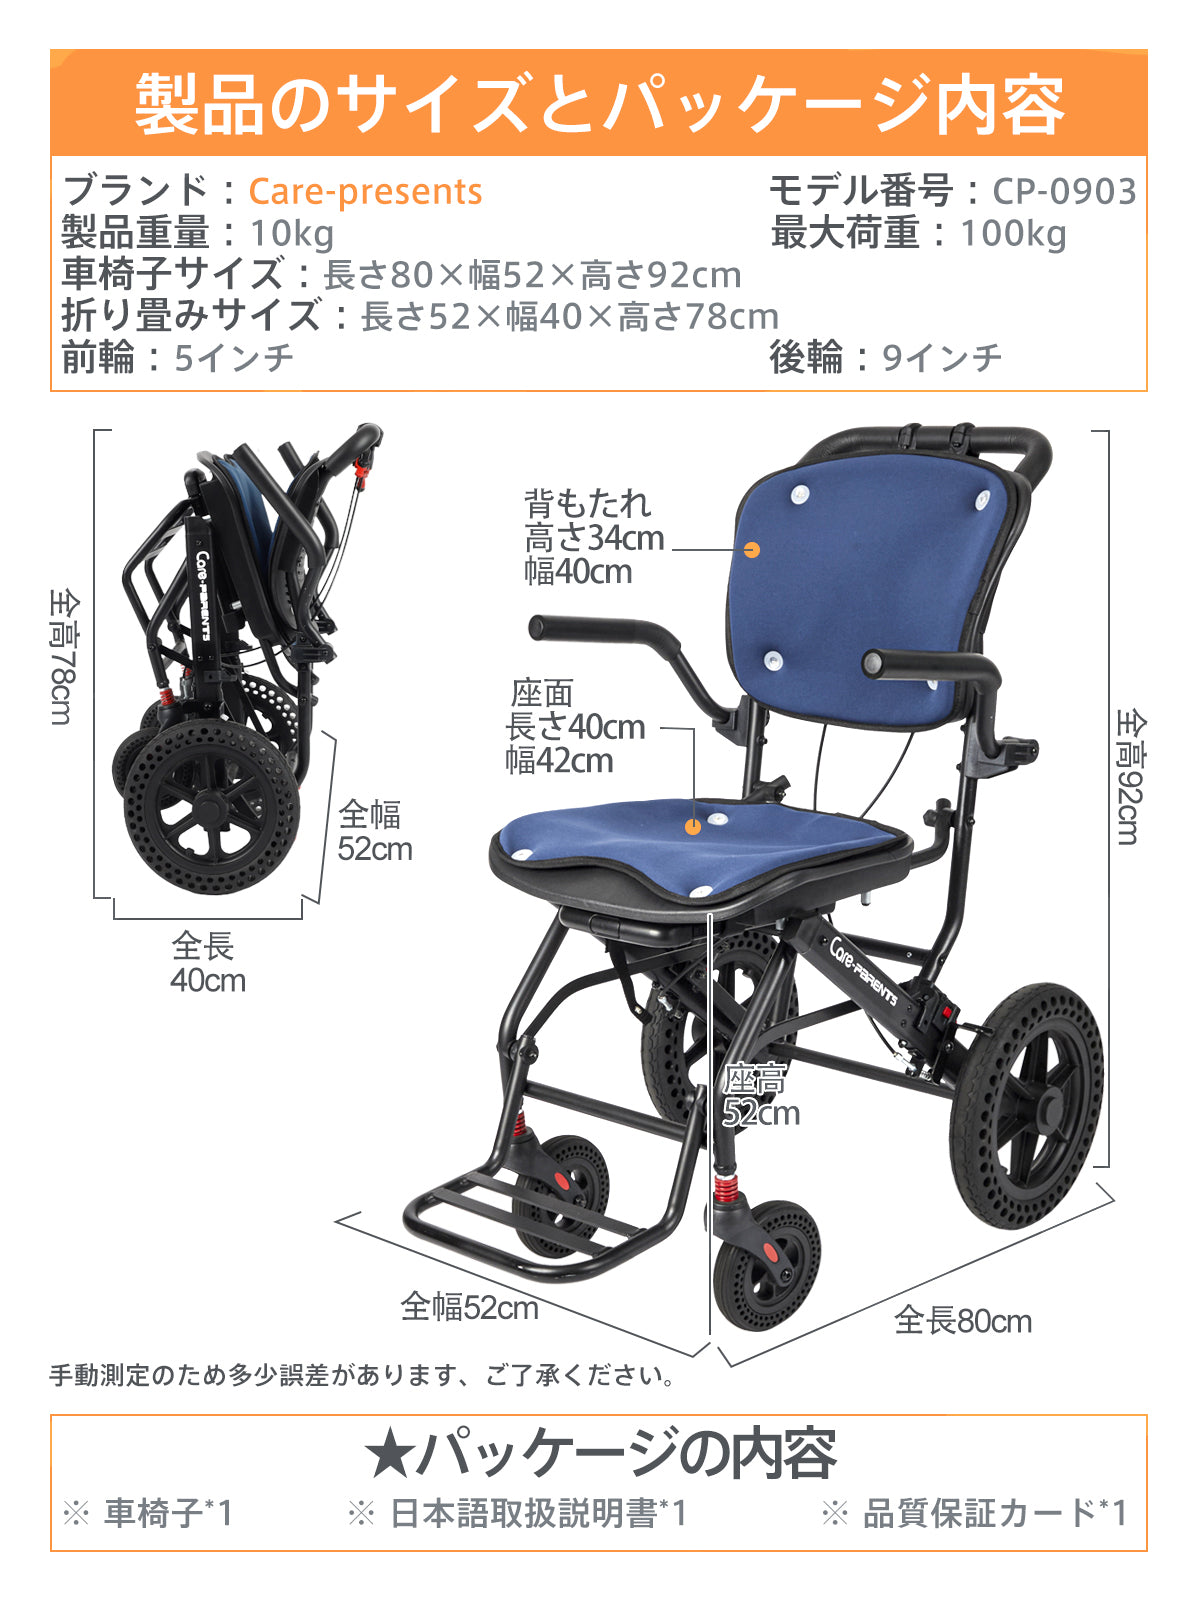 Care-Parents 軽量車椅子 折りたたみ式 介助ブレーキ付き 外出用 旅行用 (CP-0903R)